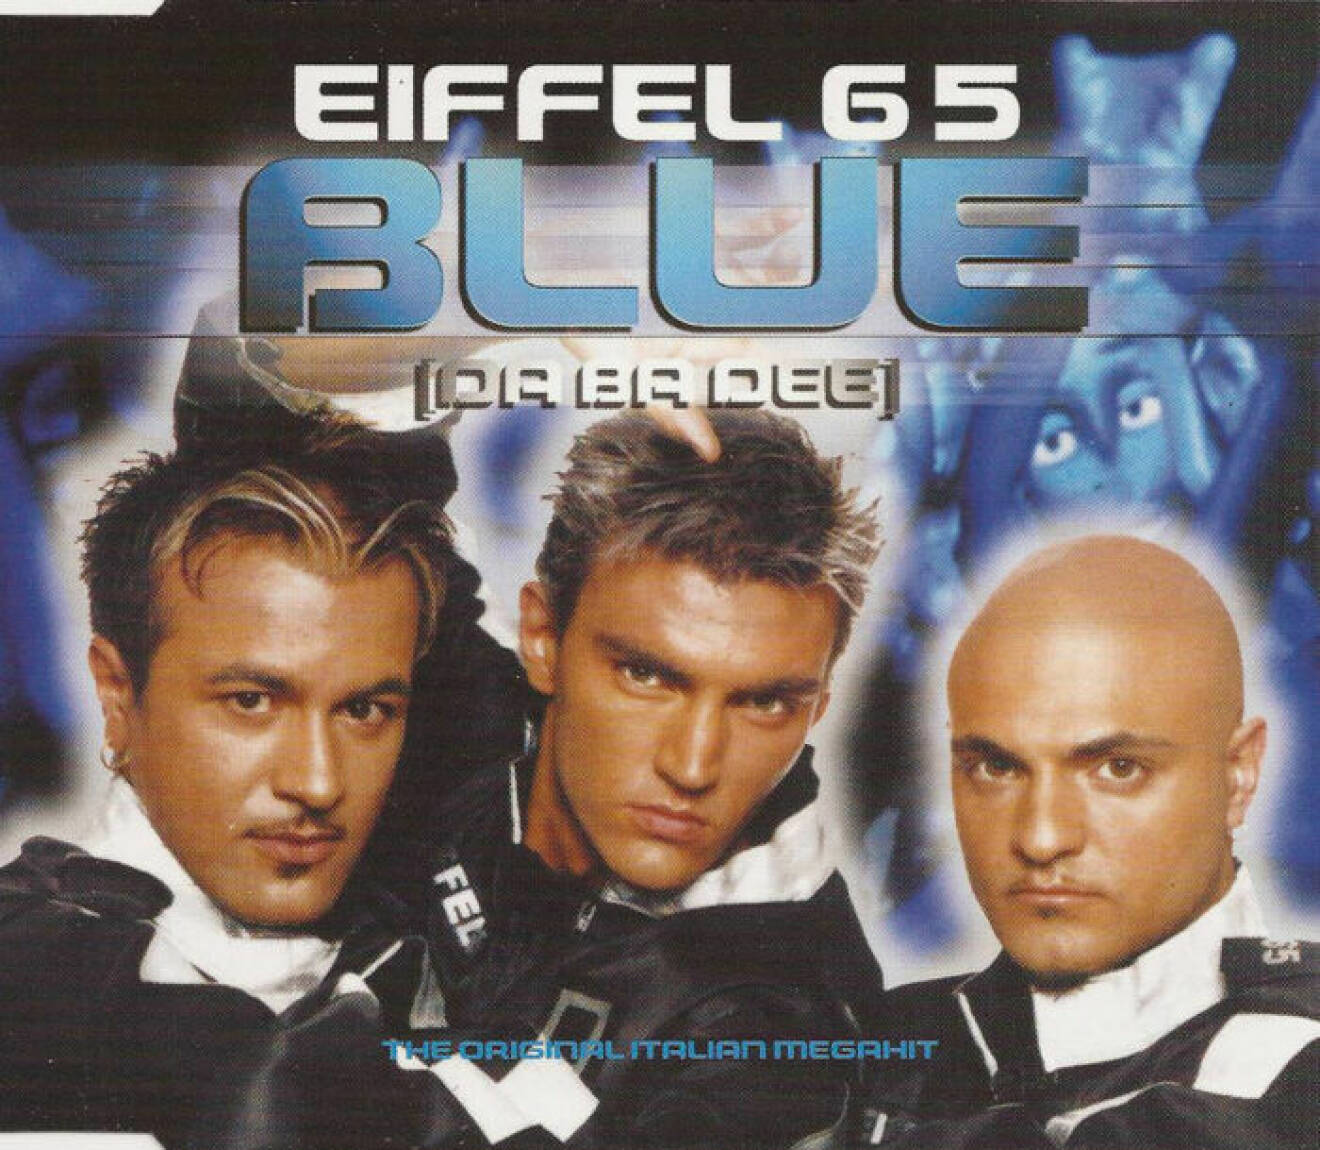 Singeln Blue av Eiffel 65.